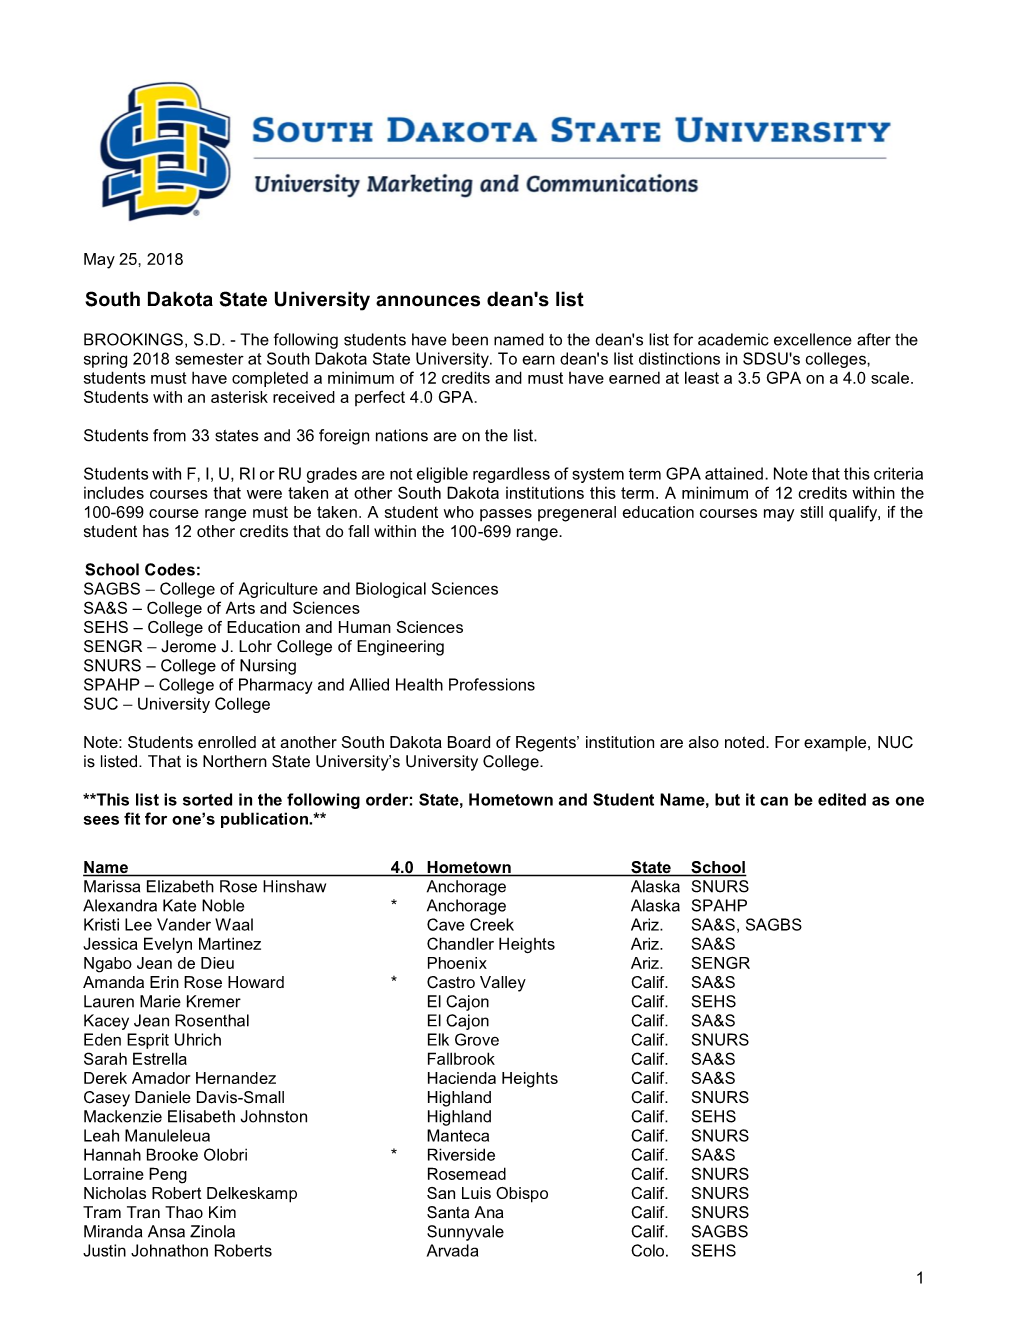 South Dakota State Univsersity Dean's List Spring 2018